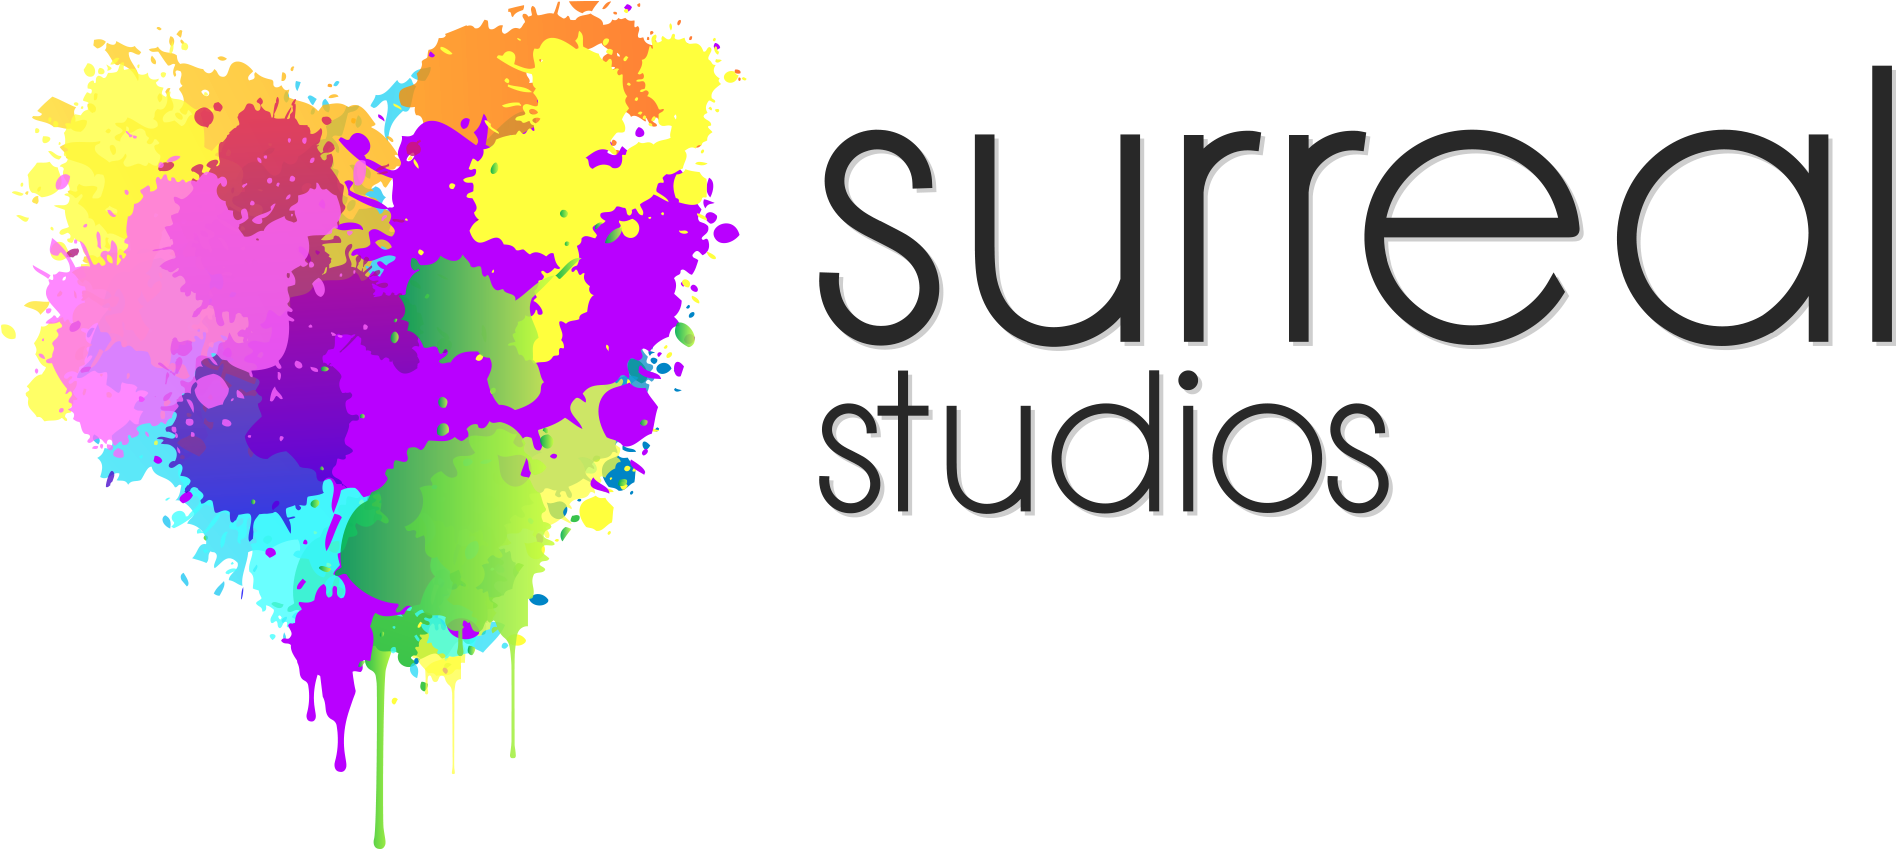 Colorful_ Surreal_ Studios_ Logo PNG image